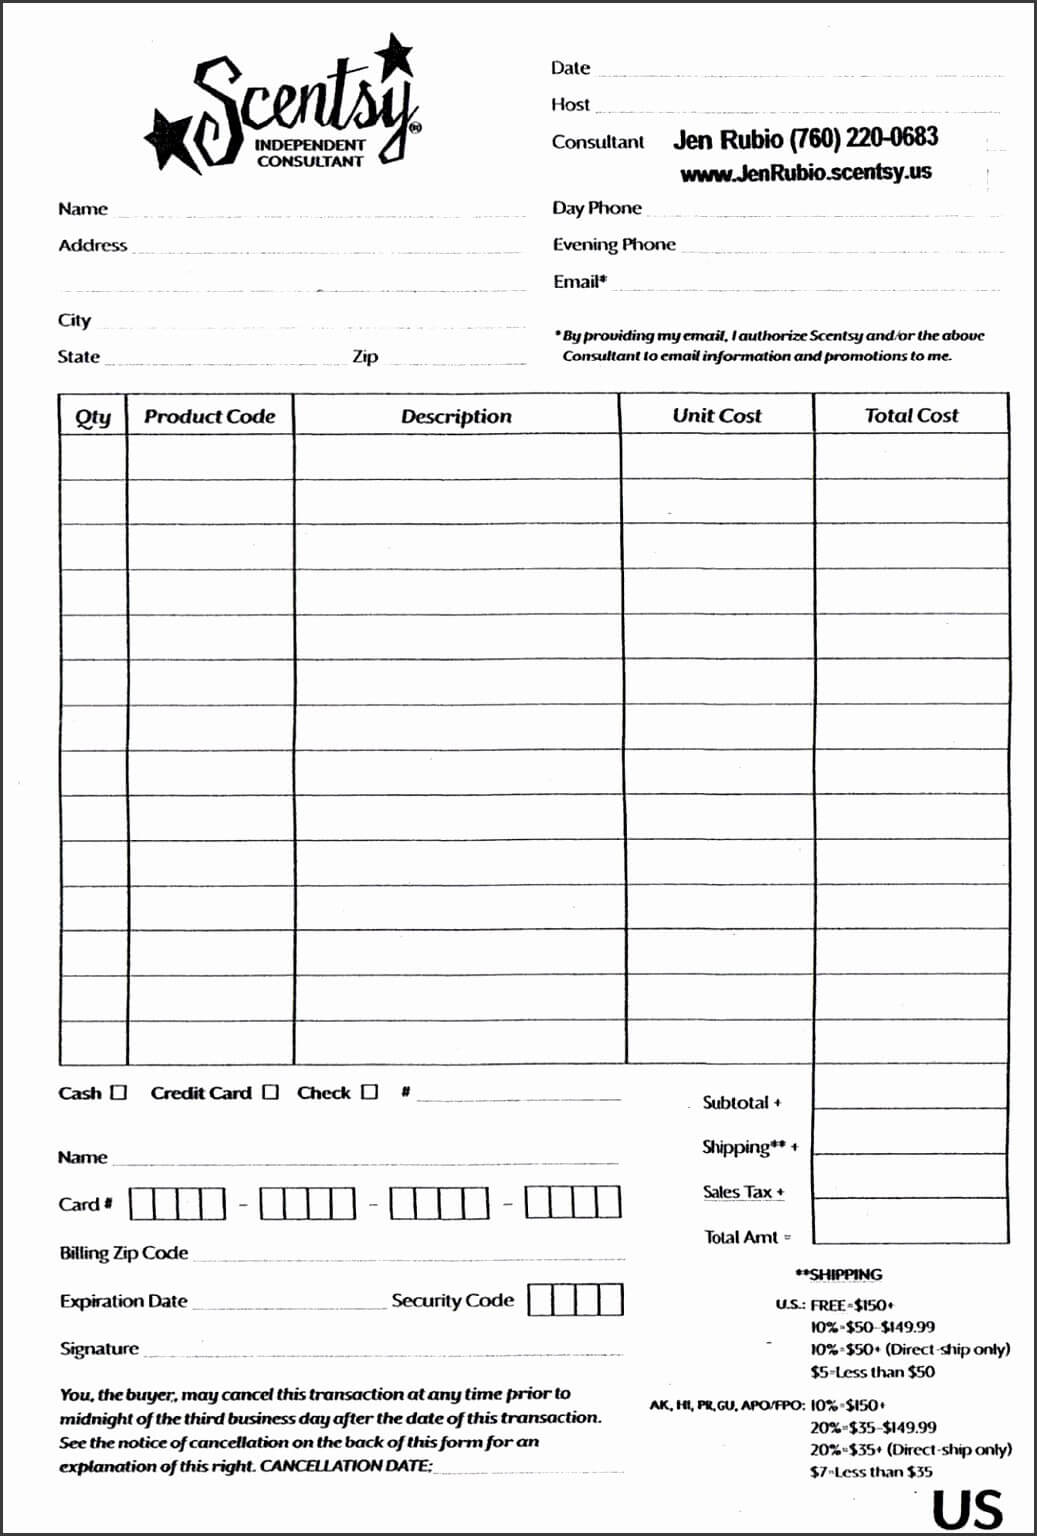 022 Fundraising Order Form Templates Elegant Blank For Blank Fundraiser Order Form Template